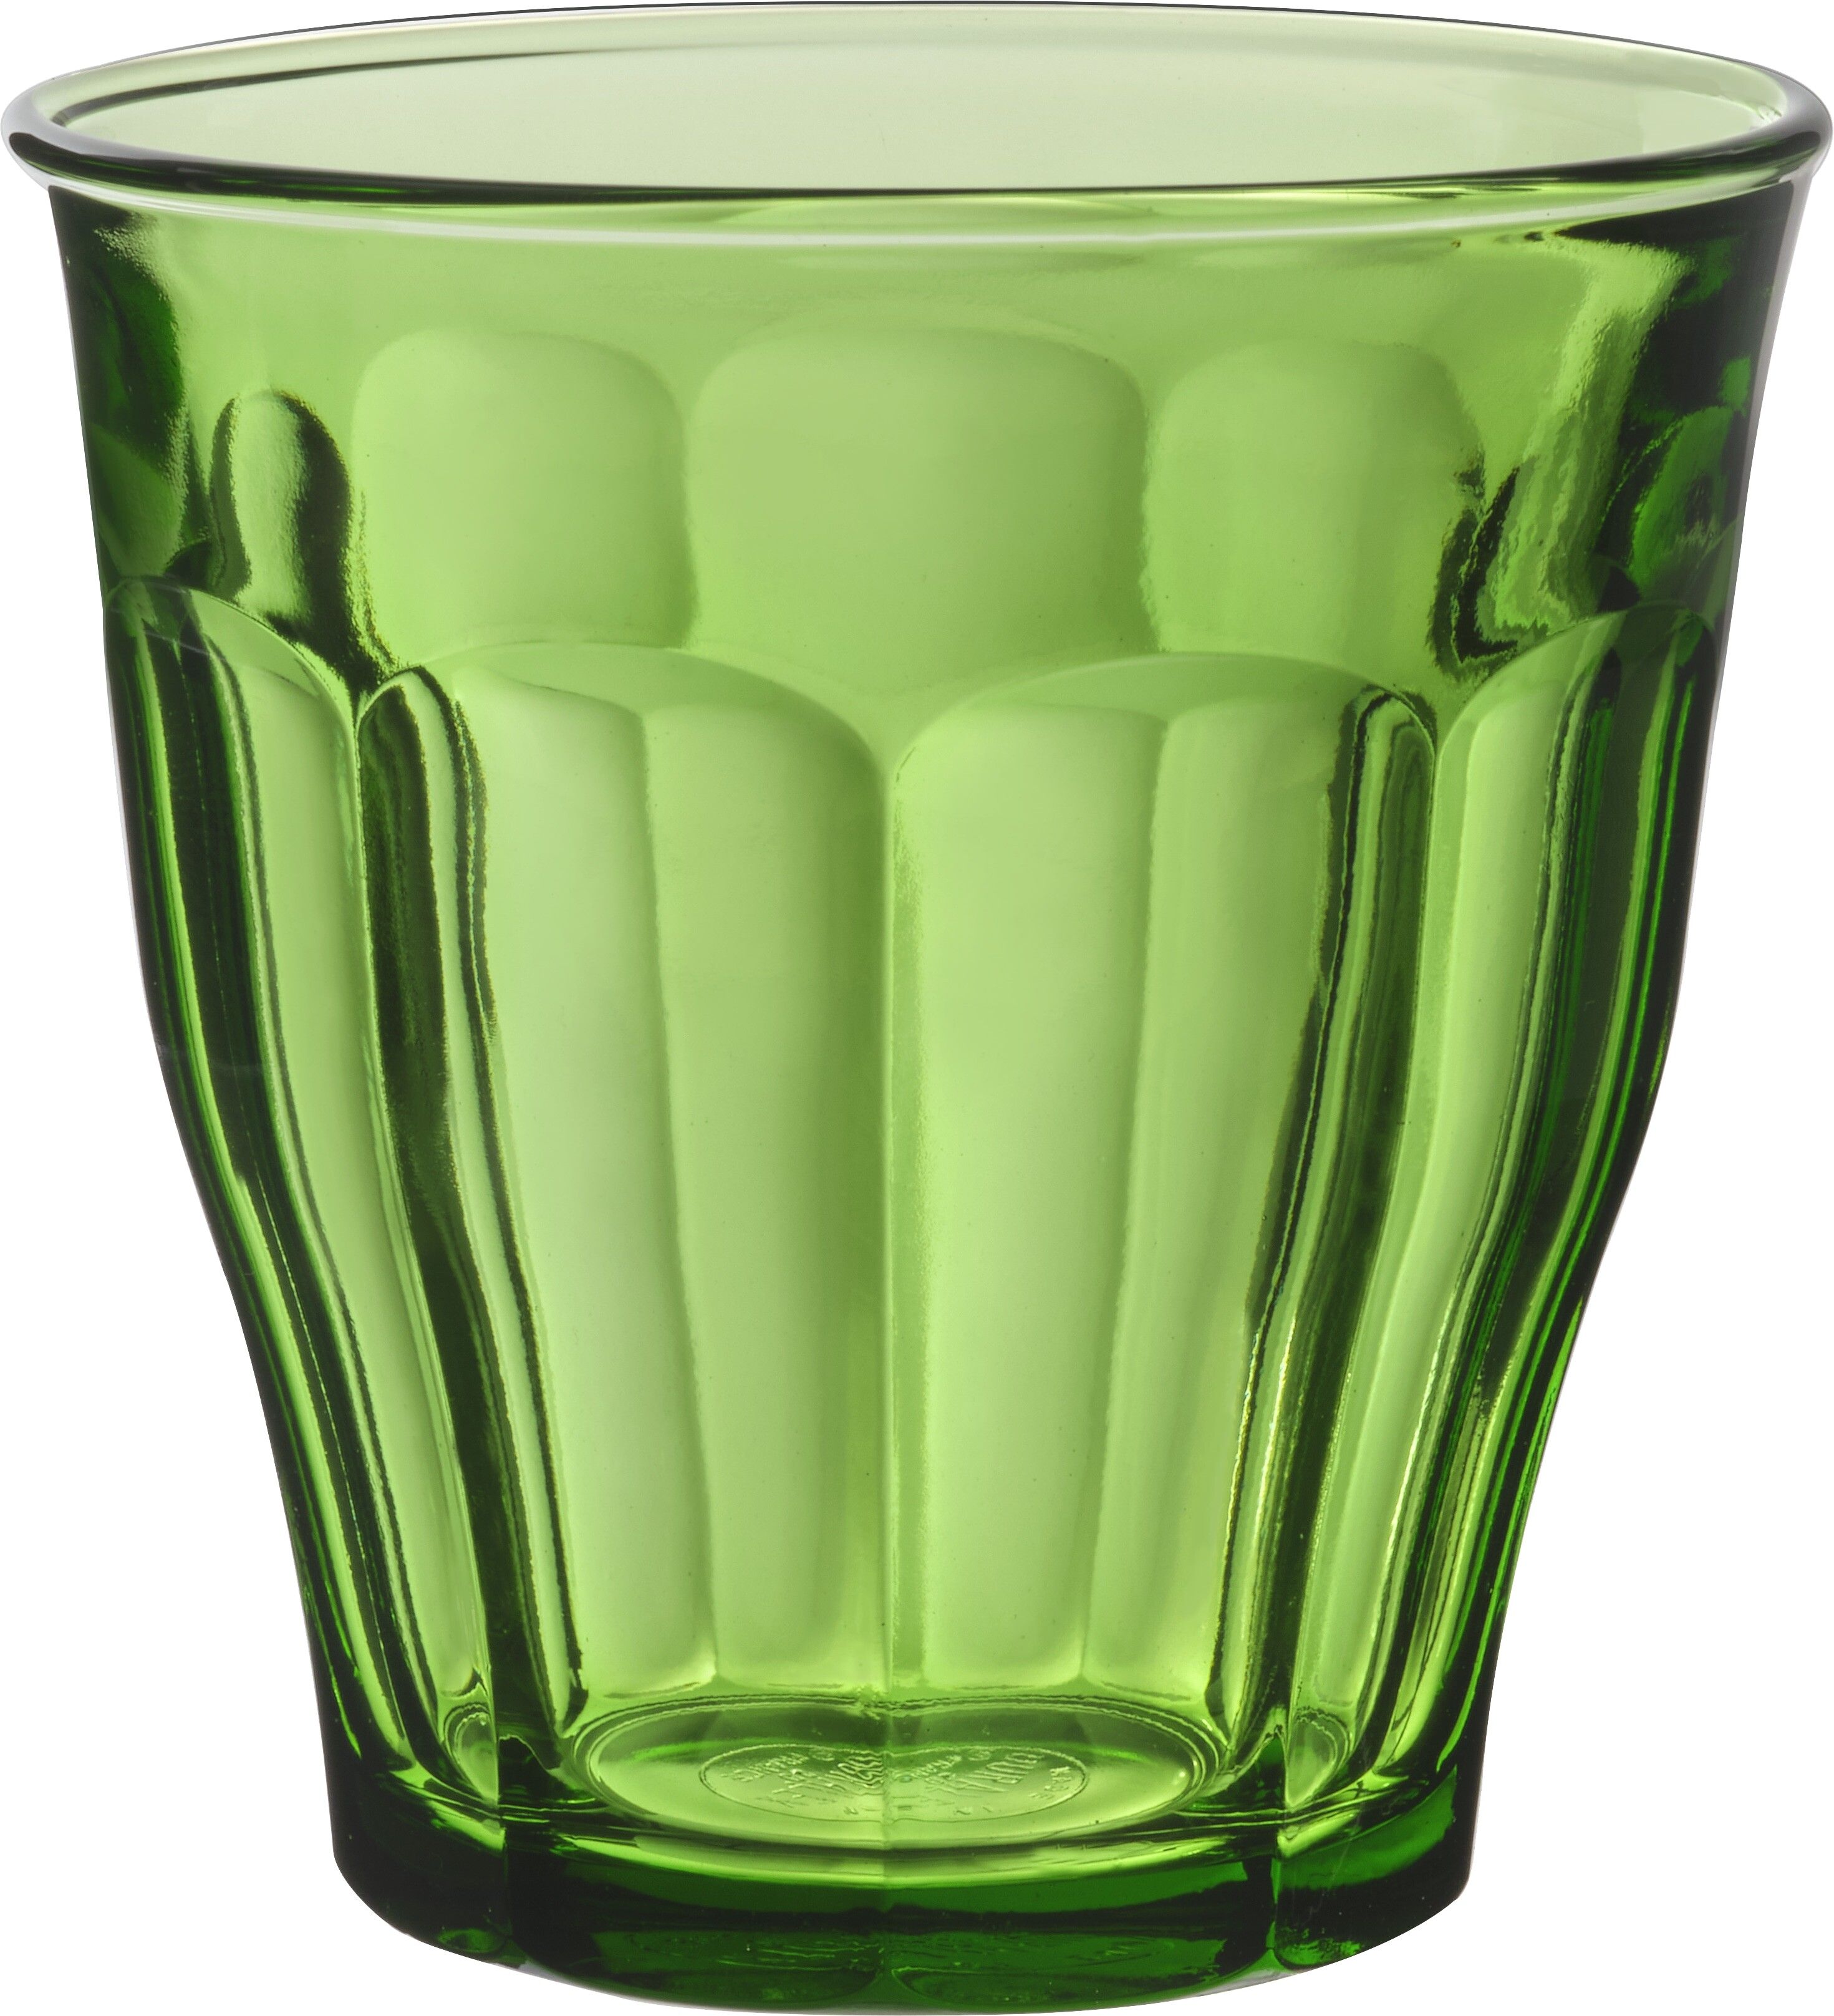 Стаканы Duralex Picardie 130мл. Набор стаканов Manhattan прозрачные 6шт 310мл Duralex 1057ab06a0111. Стакан Greenmaster су260. Набор альтернатива 10 стаканчиков зеленый цвет. Стакан с зеленой водой